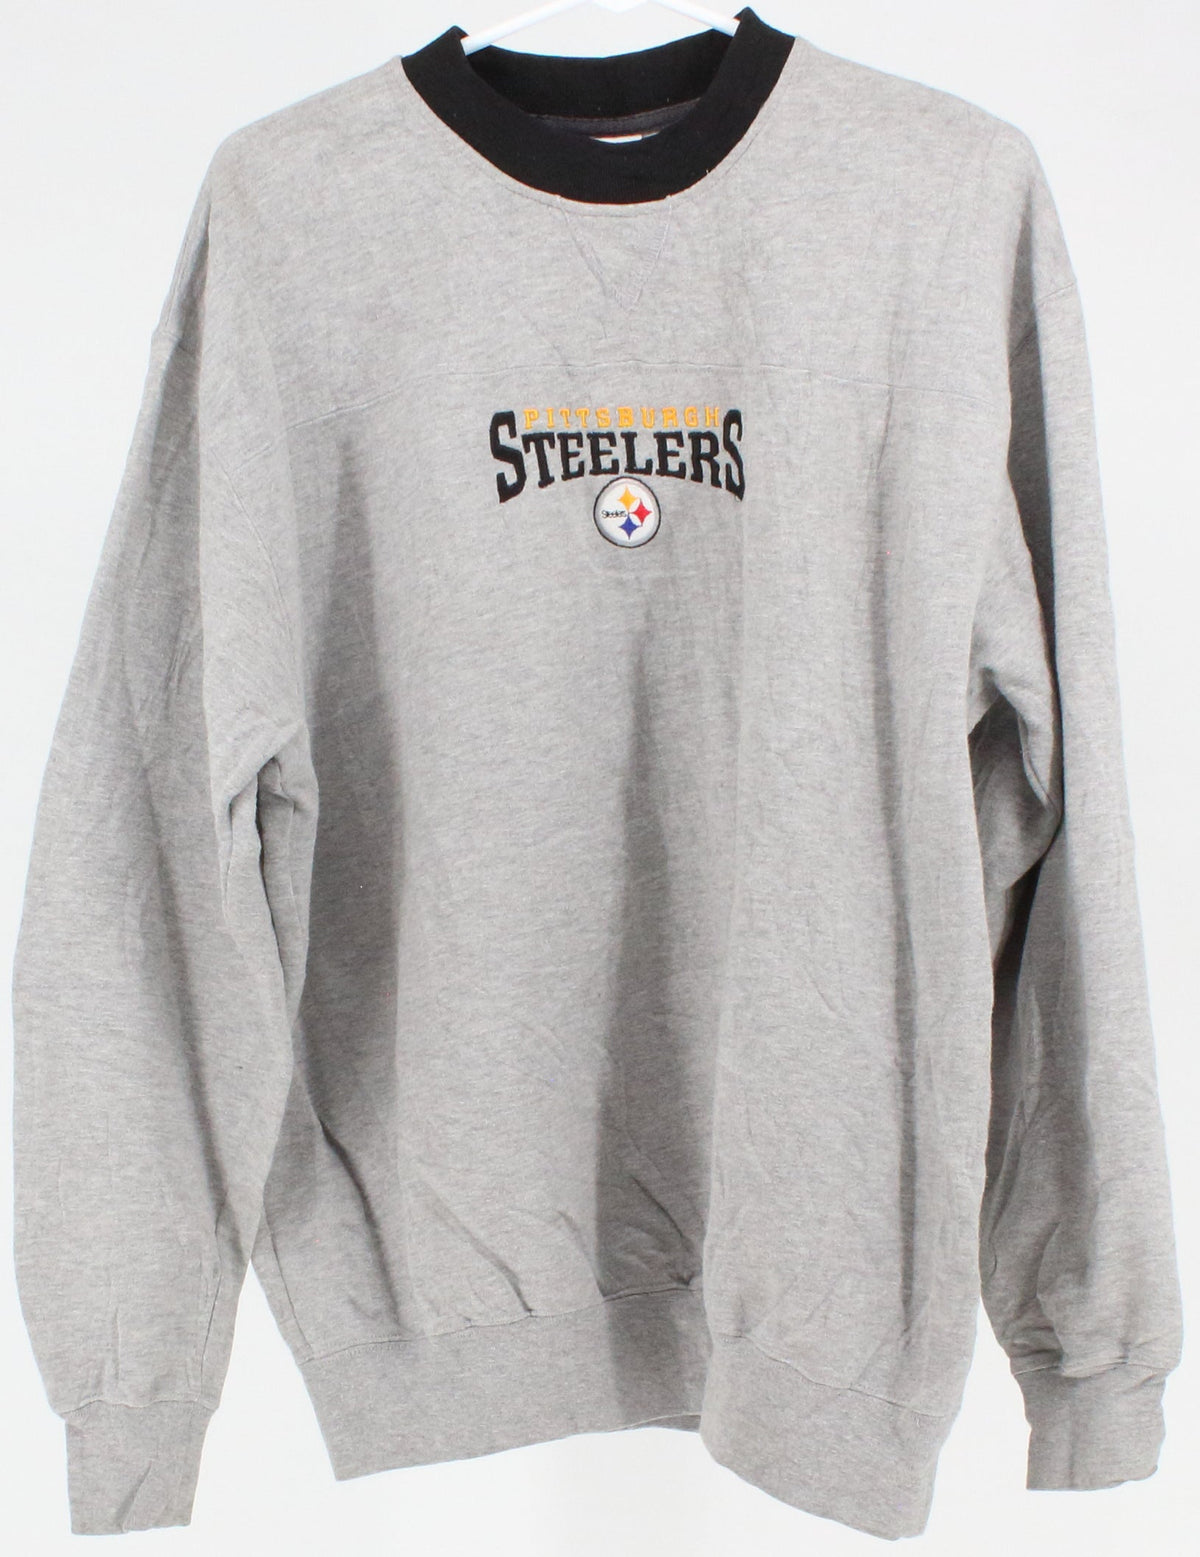 NFL Steelers Grey Pittsburgh Steelers Embroidered Sweatshirt